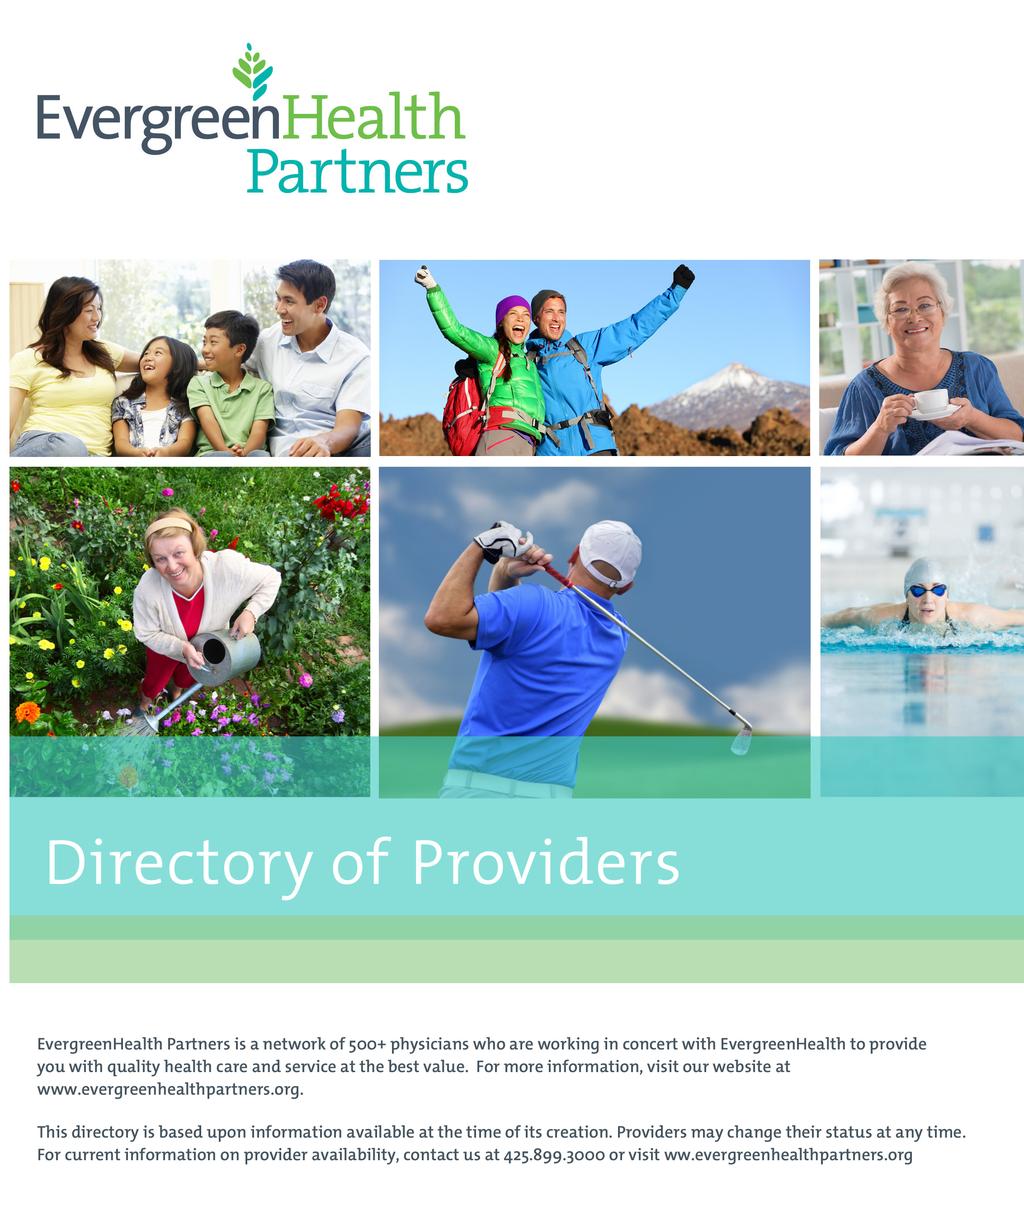 Evergreen Health Partners